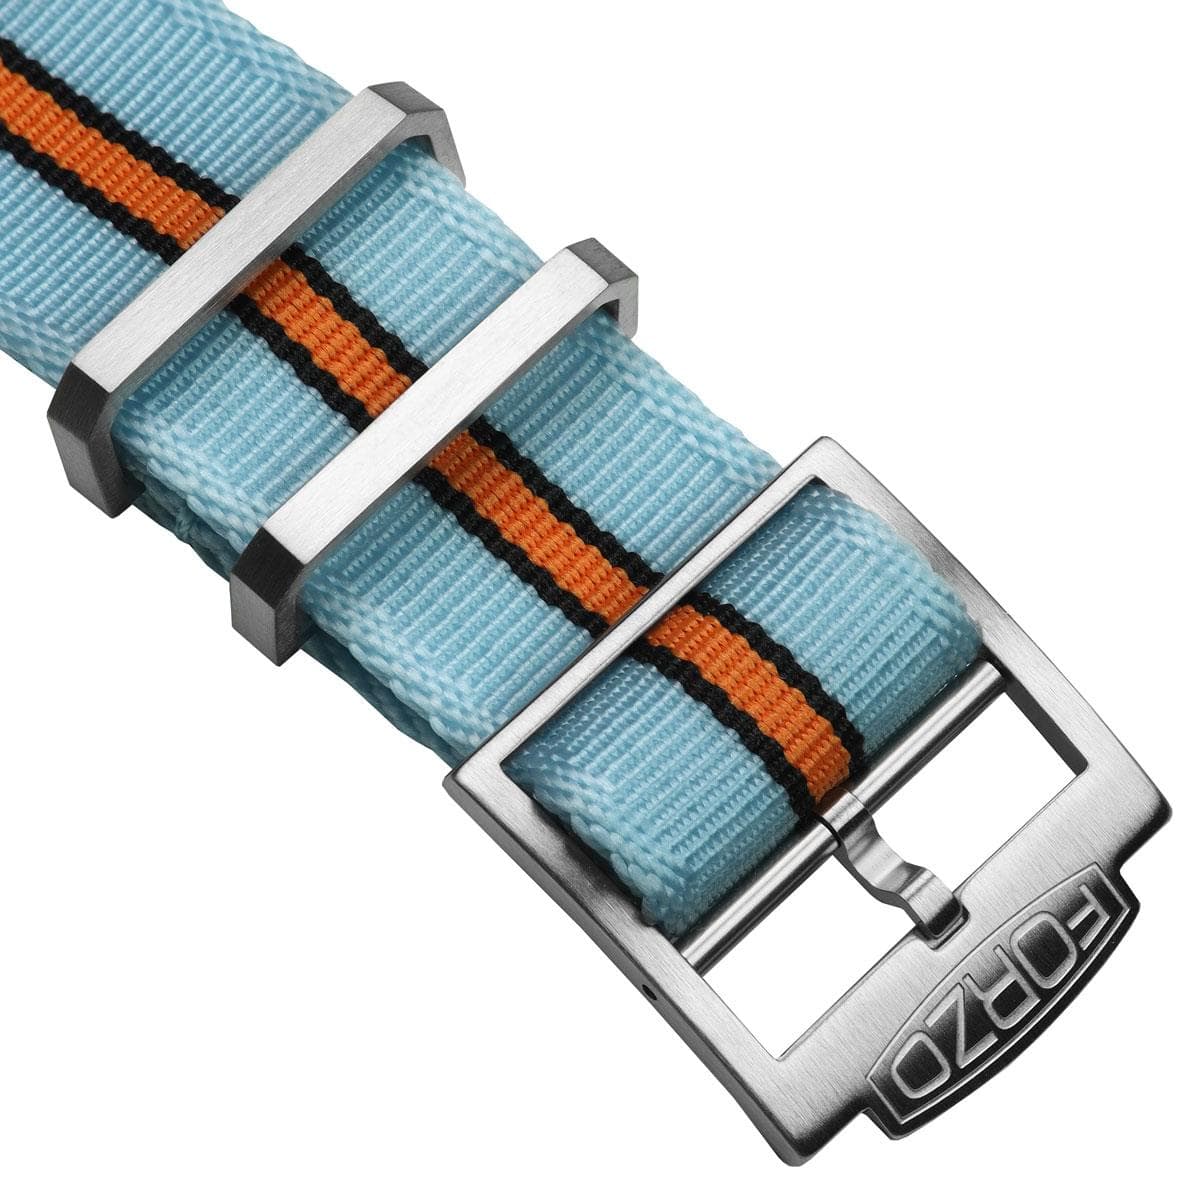 FORZO Racing Single-Pass Nylon Watch Strap - Light Blue with Racing Stripes